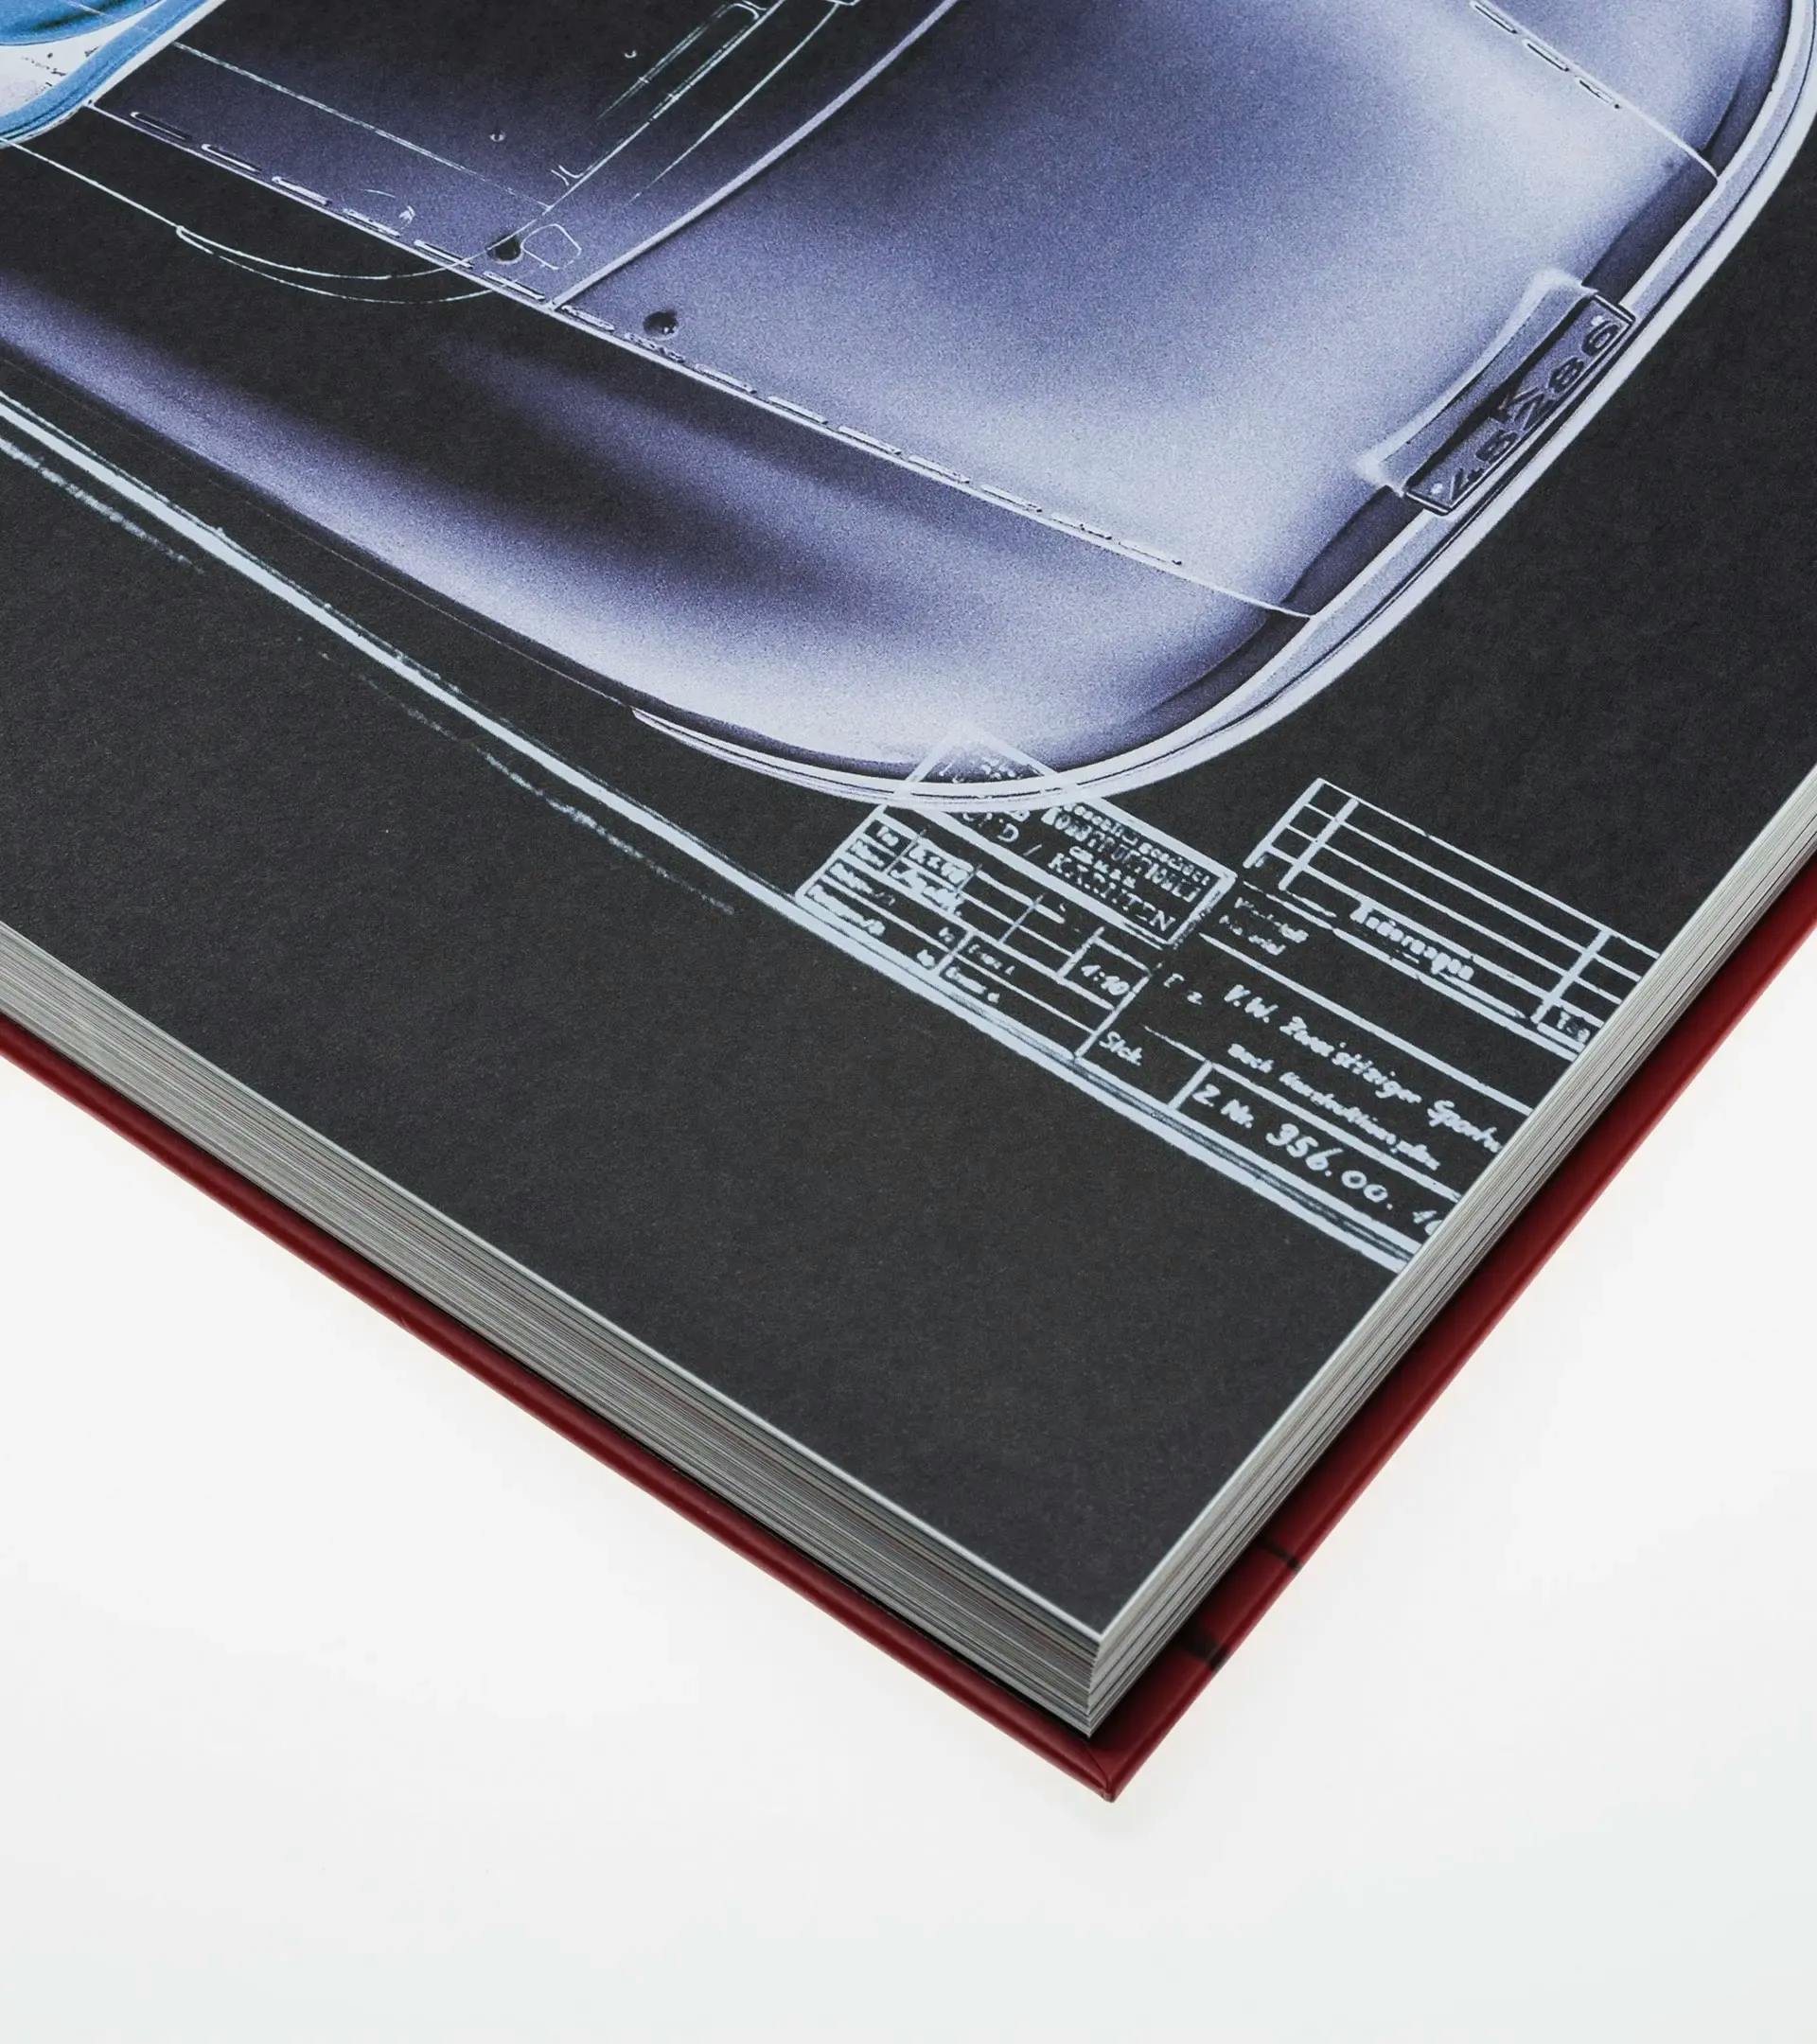 The Porsche Book - Las mejores imágenes de Porsche por Frank M. Orel 2